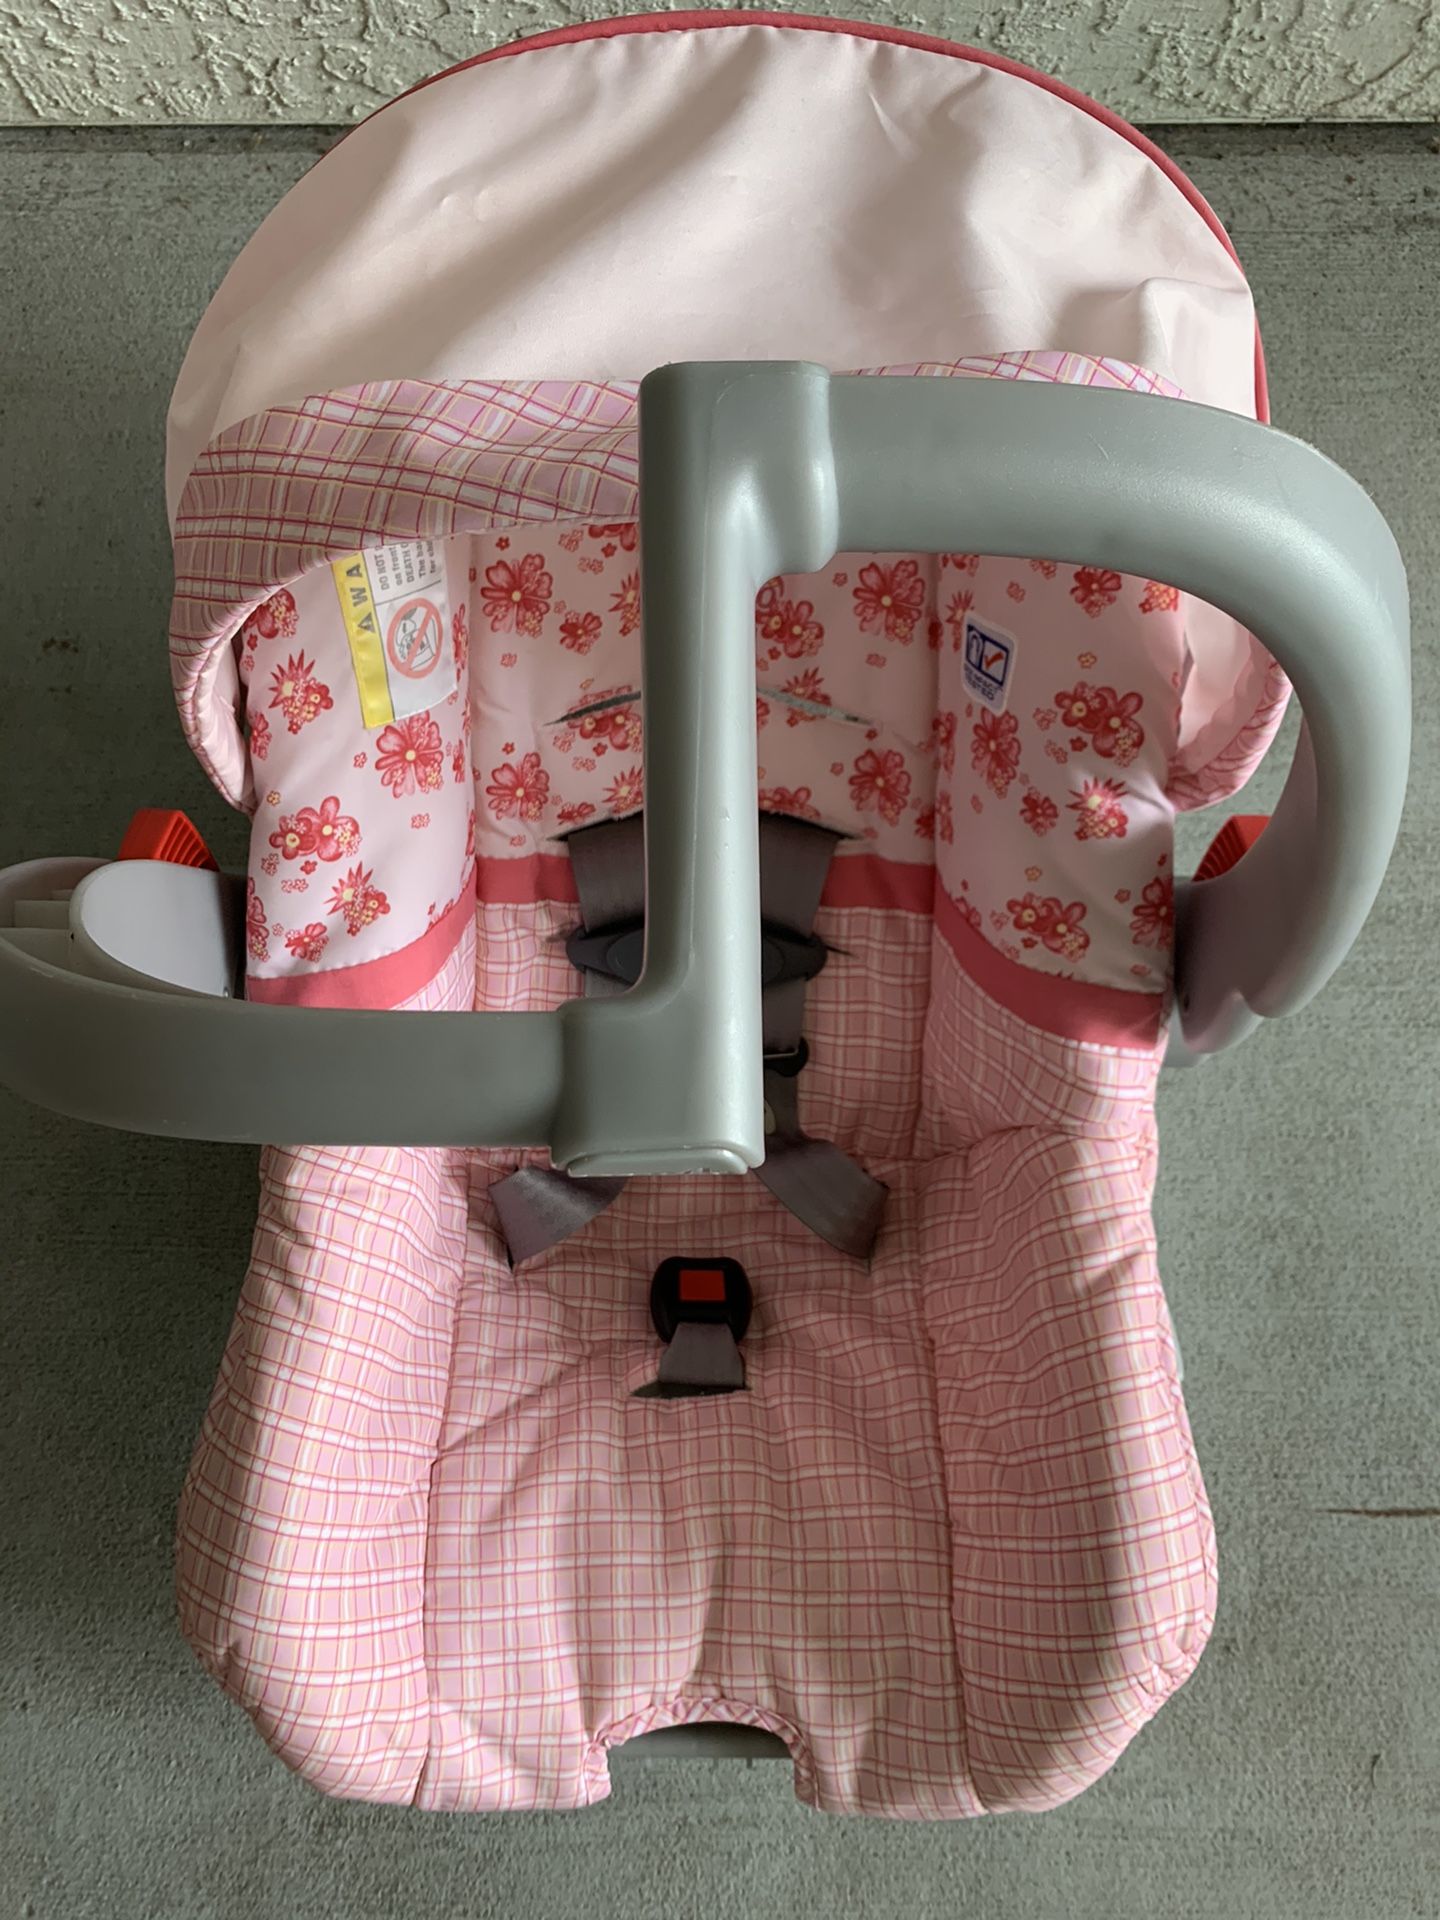 Evenflo nurture infant car seat